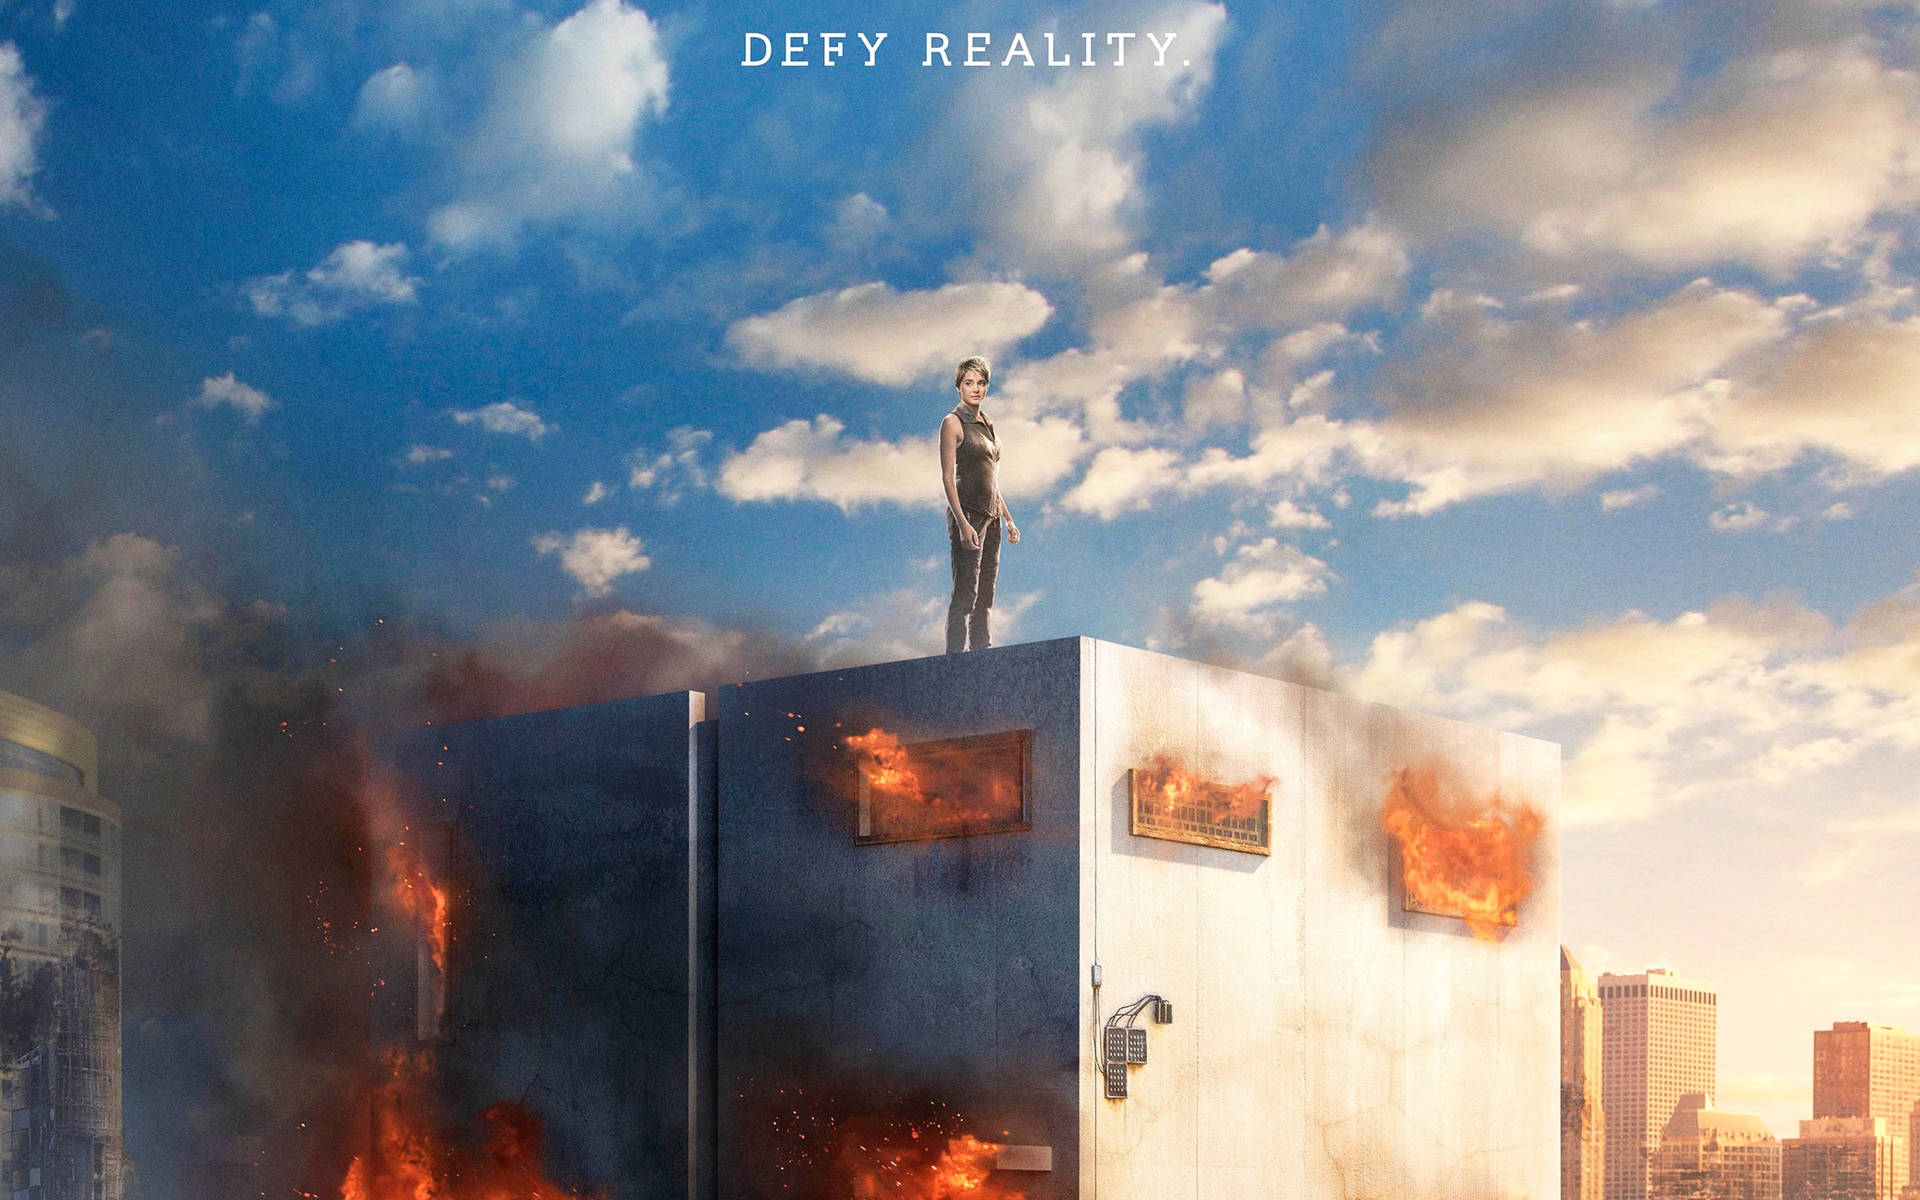 Tris Prior Daringly Defies Gravity in The Divergent Series Wallpaper